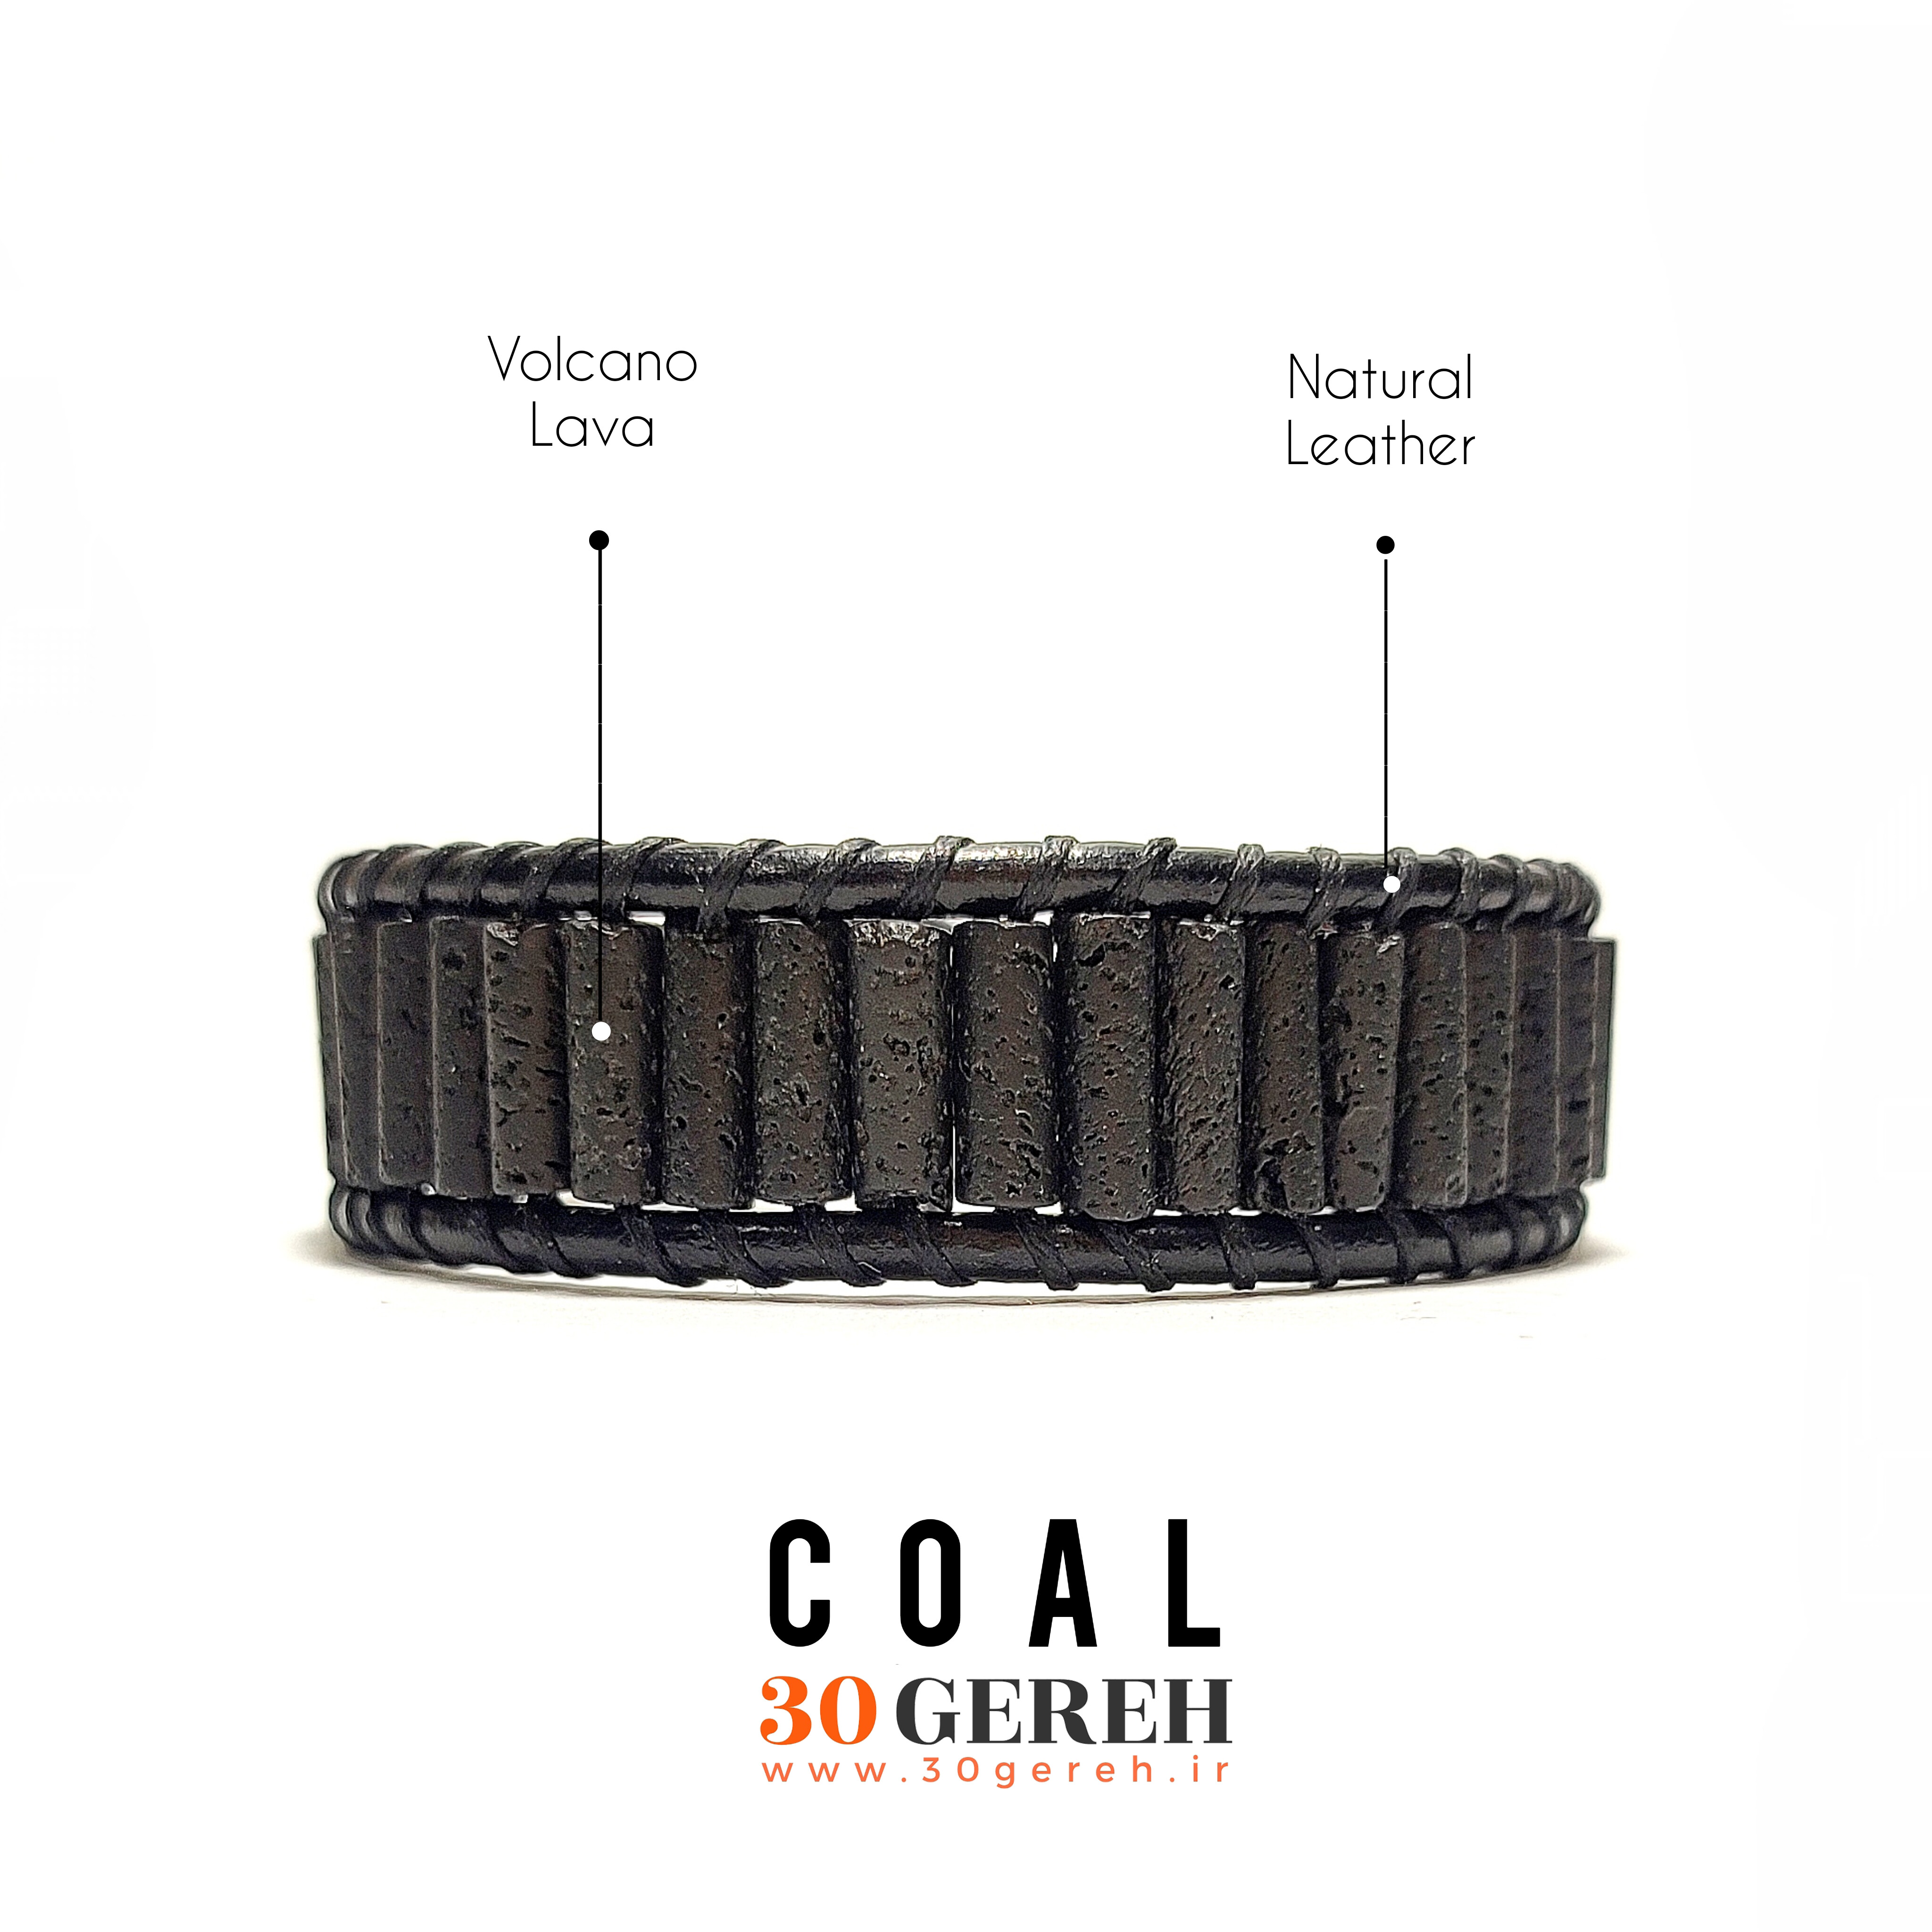 دستبند سنگی لاوا آتشفشانی تراش لوله ای دستبند زغال با چرم طبیعی